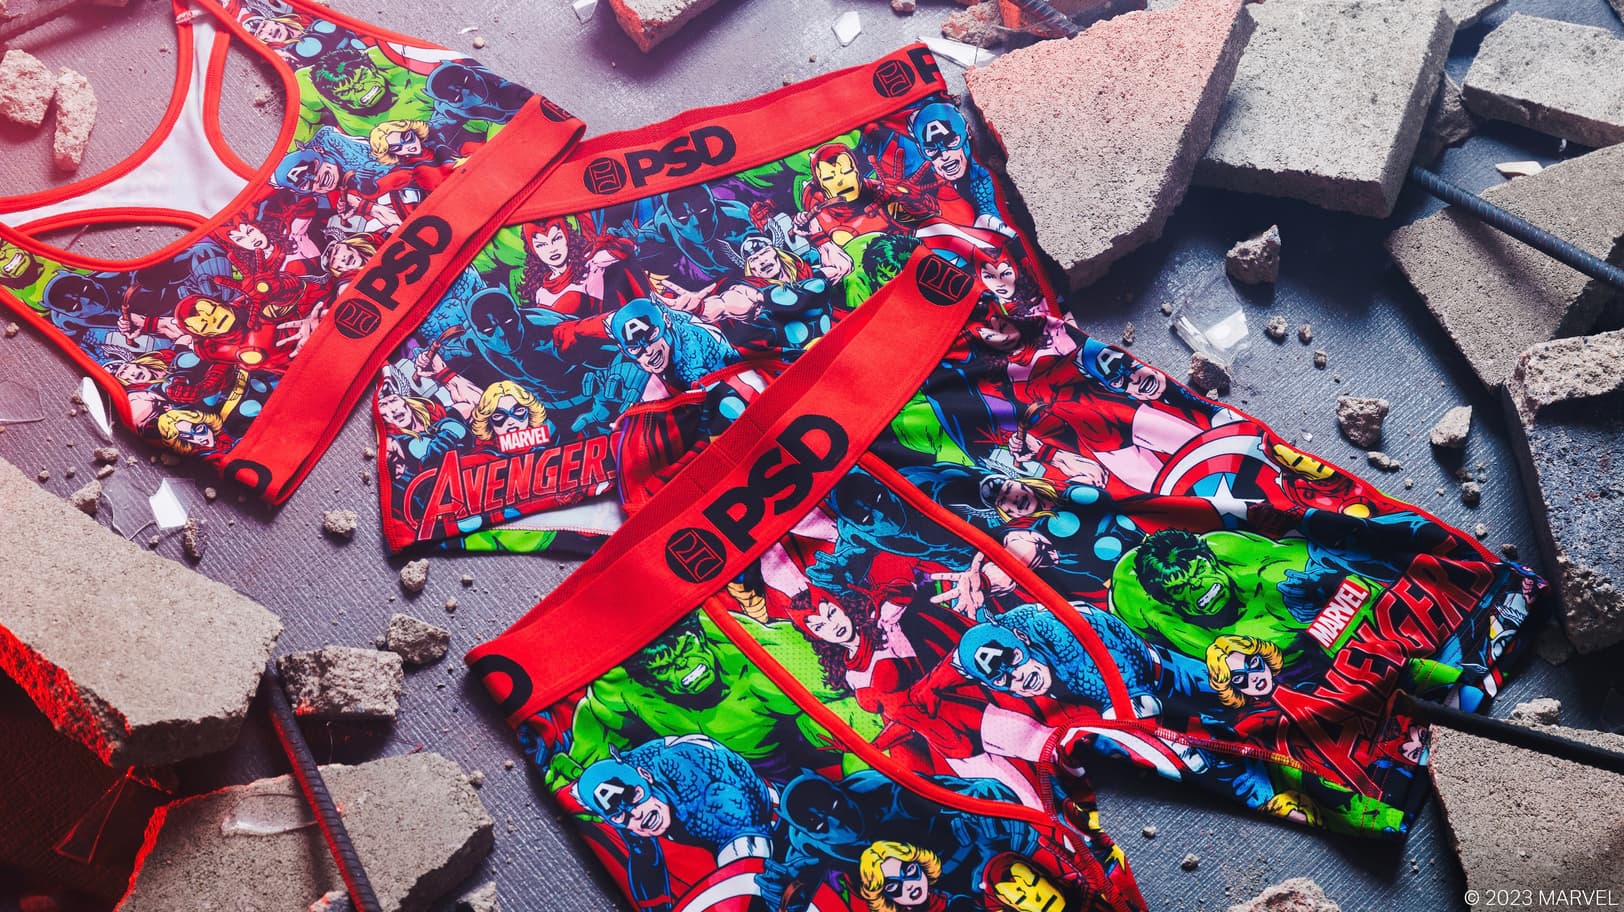 Marvel Spiderman Boys' Spider-Man Underwear Pack of 5 Multicolored